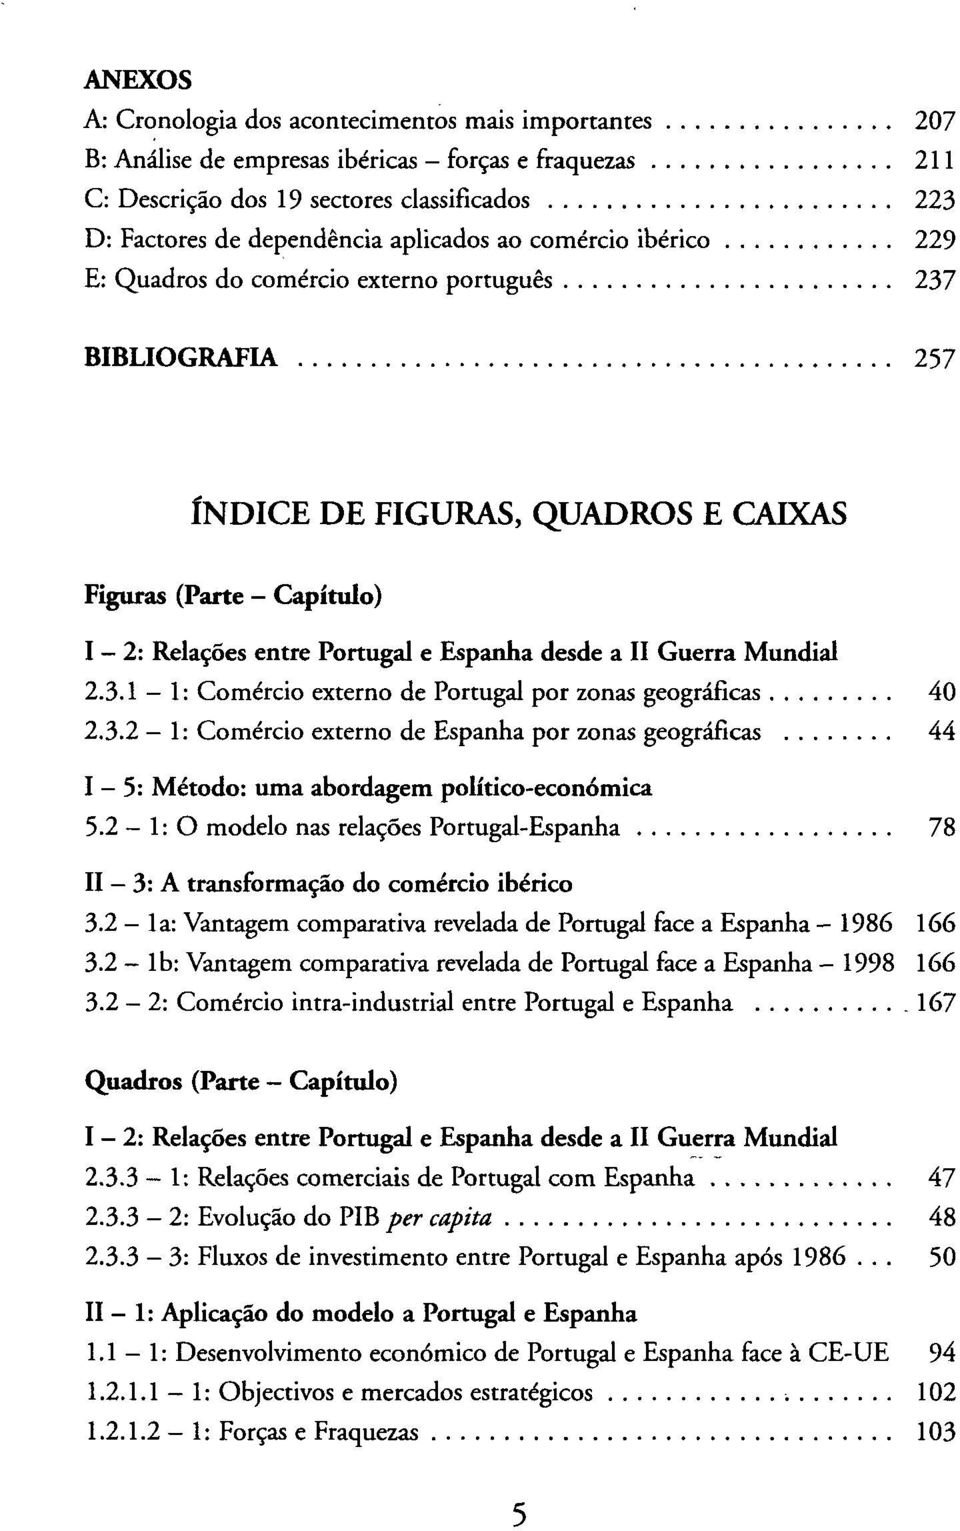 desde a II Guerra Mundial 2.3.1 1: Comércio externo de Portugal por zonas geográficas 40 2.3.2-1: Comércio externo de Espanha por zonas geográficas 44 1-5: Método: uma abordagem político-económica 5.